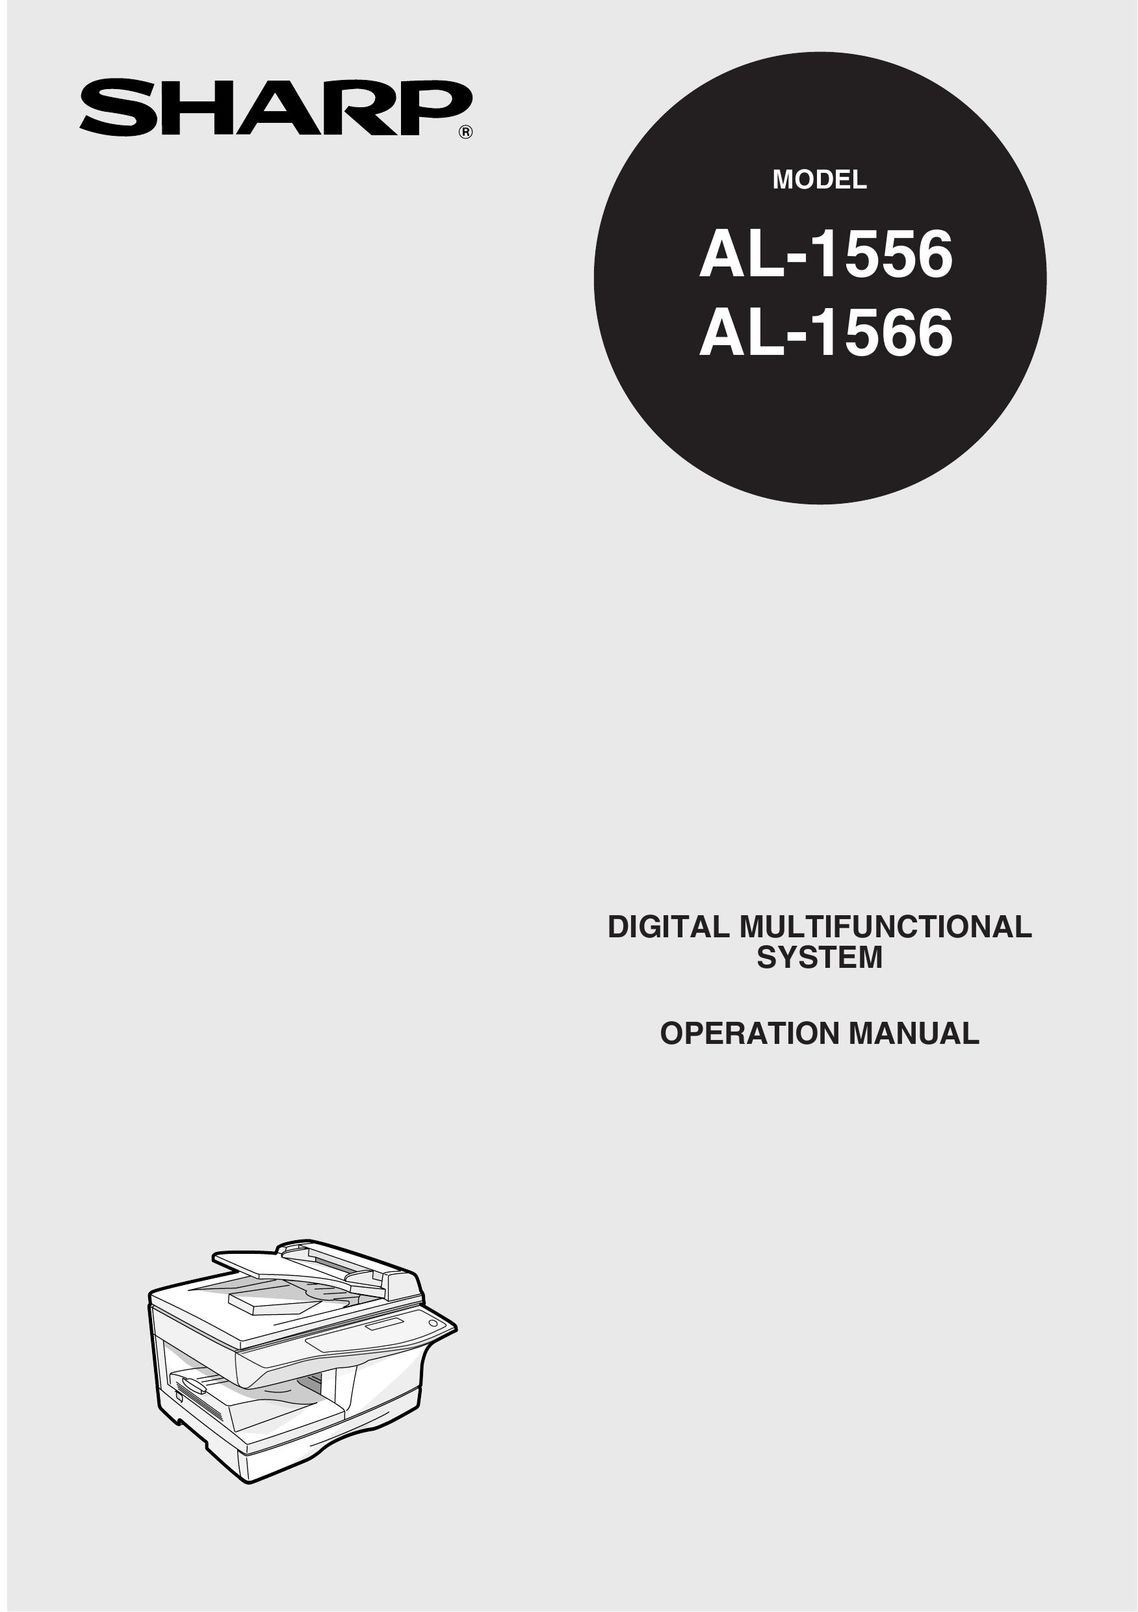 Sharp AL-1556 All in One Printer User Manual